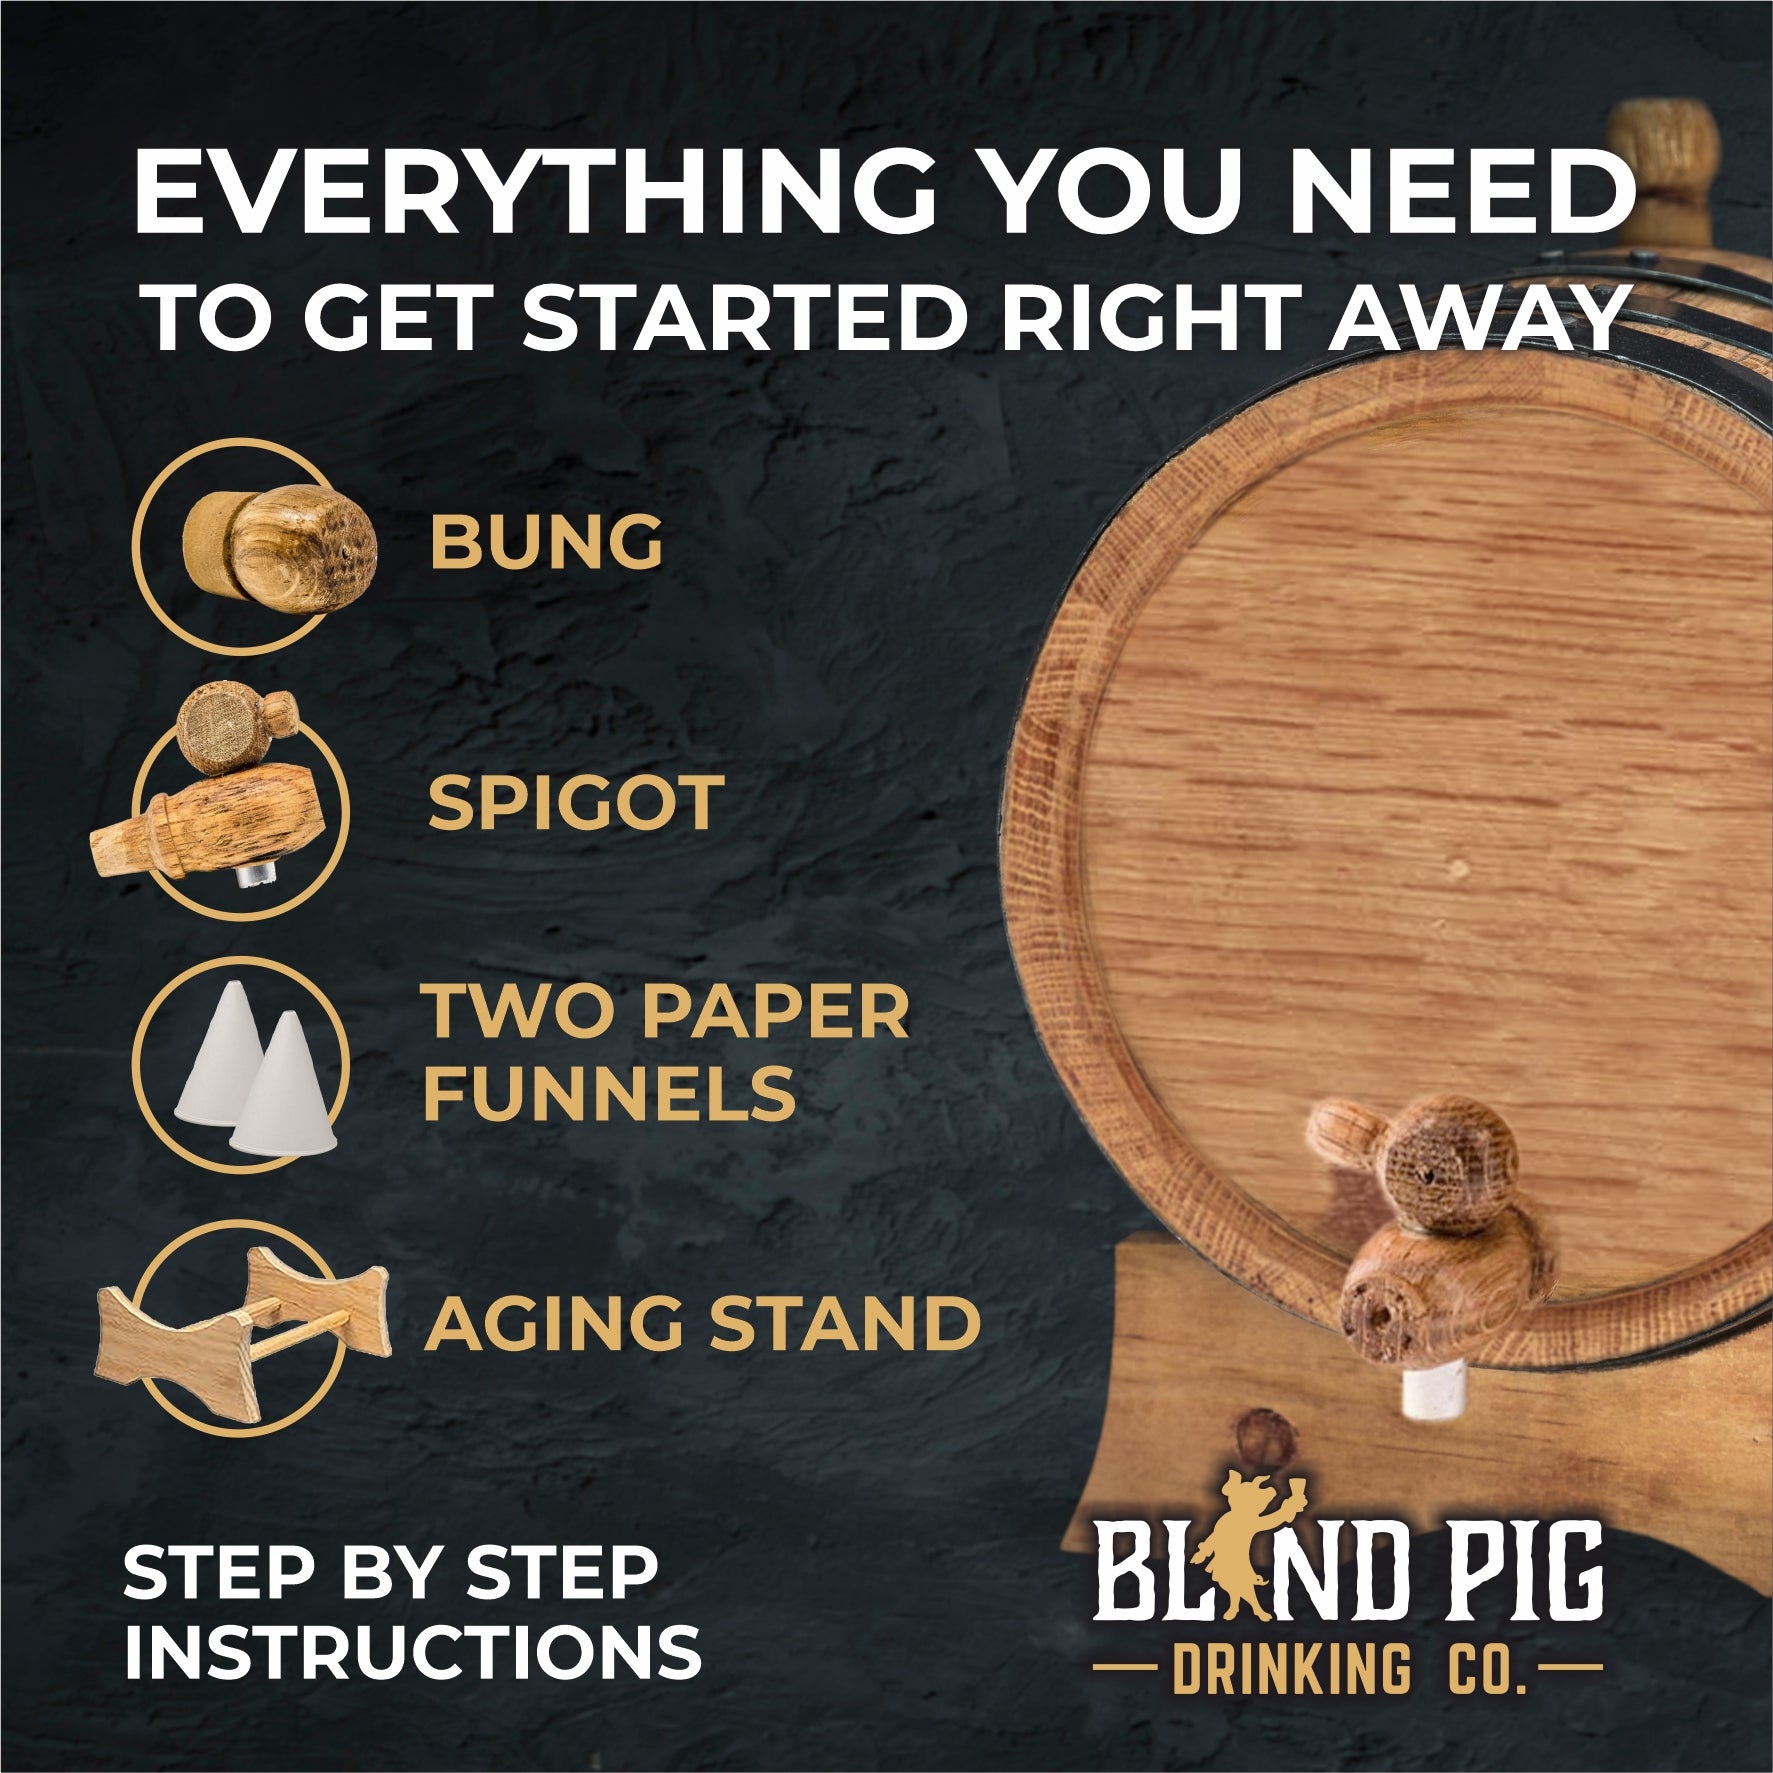 Oak Aging Barrel Kit | Personalized Small Oak Barrel with Wreath Monogram - Blind Pig Drinking Co.